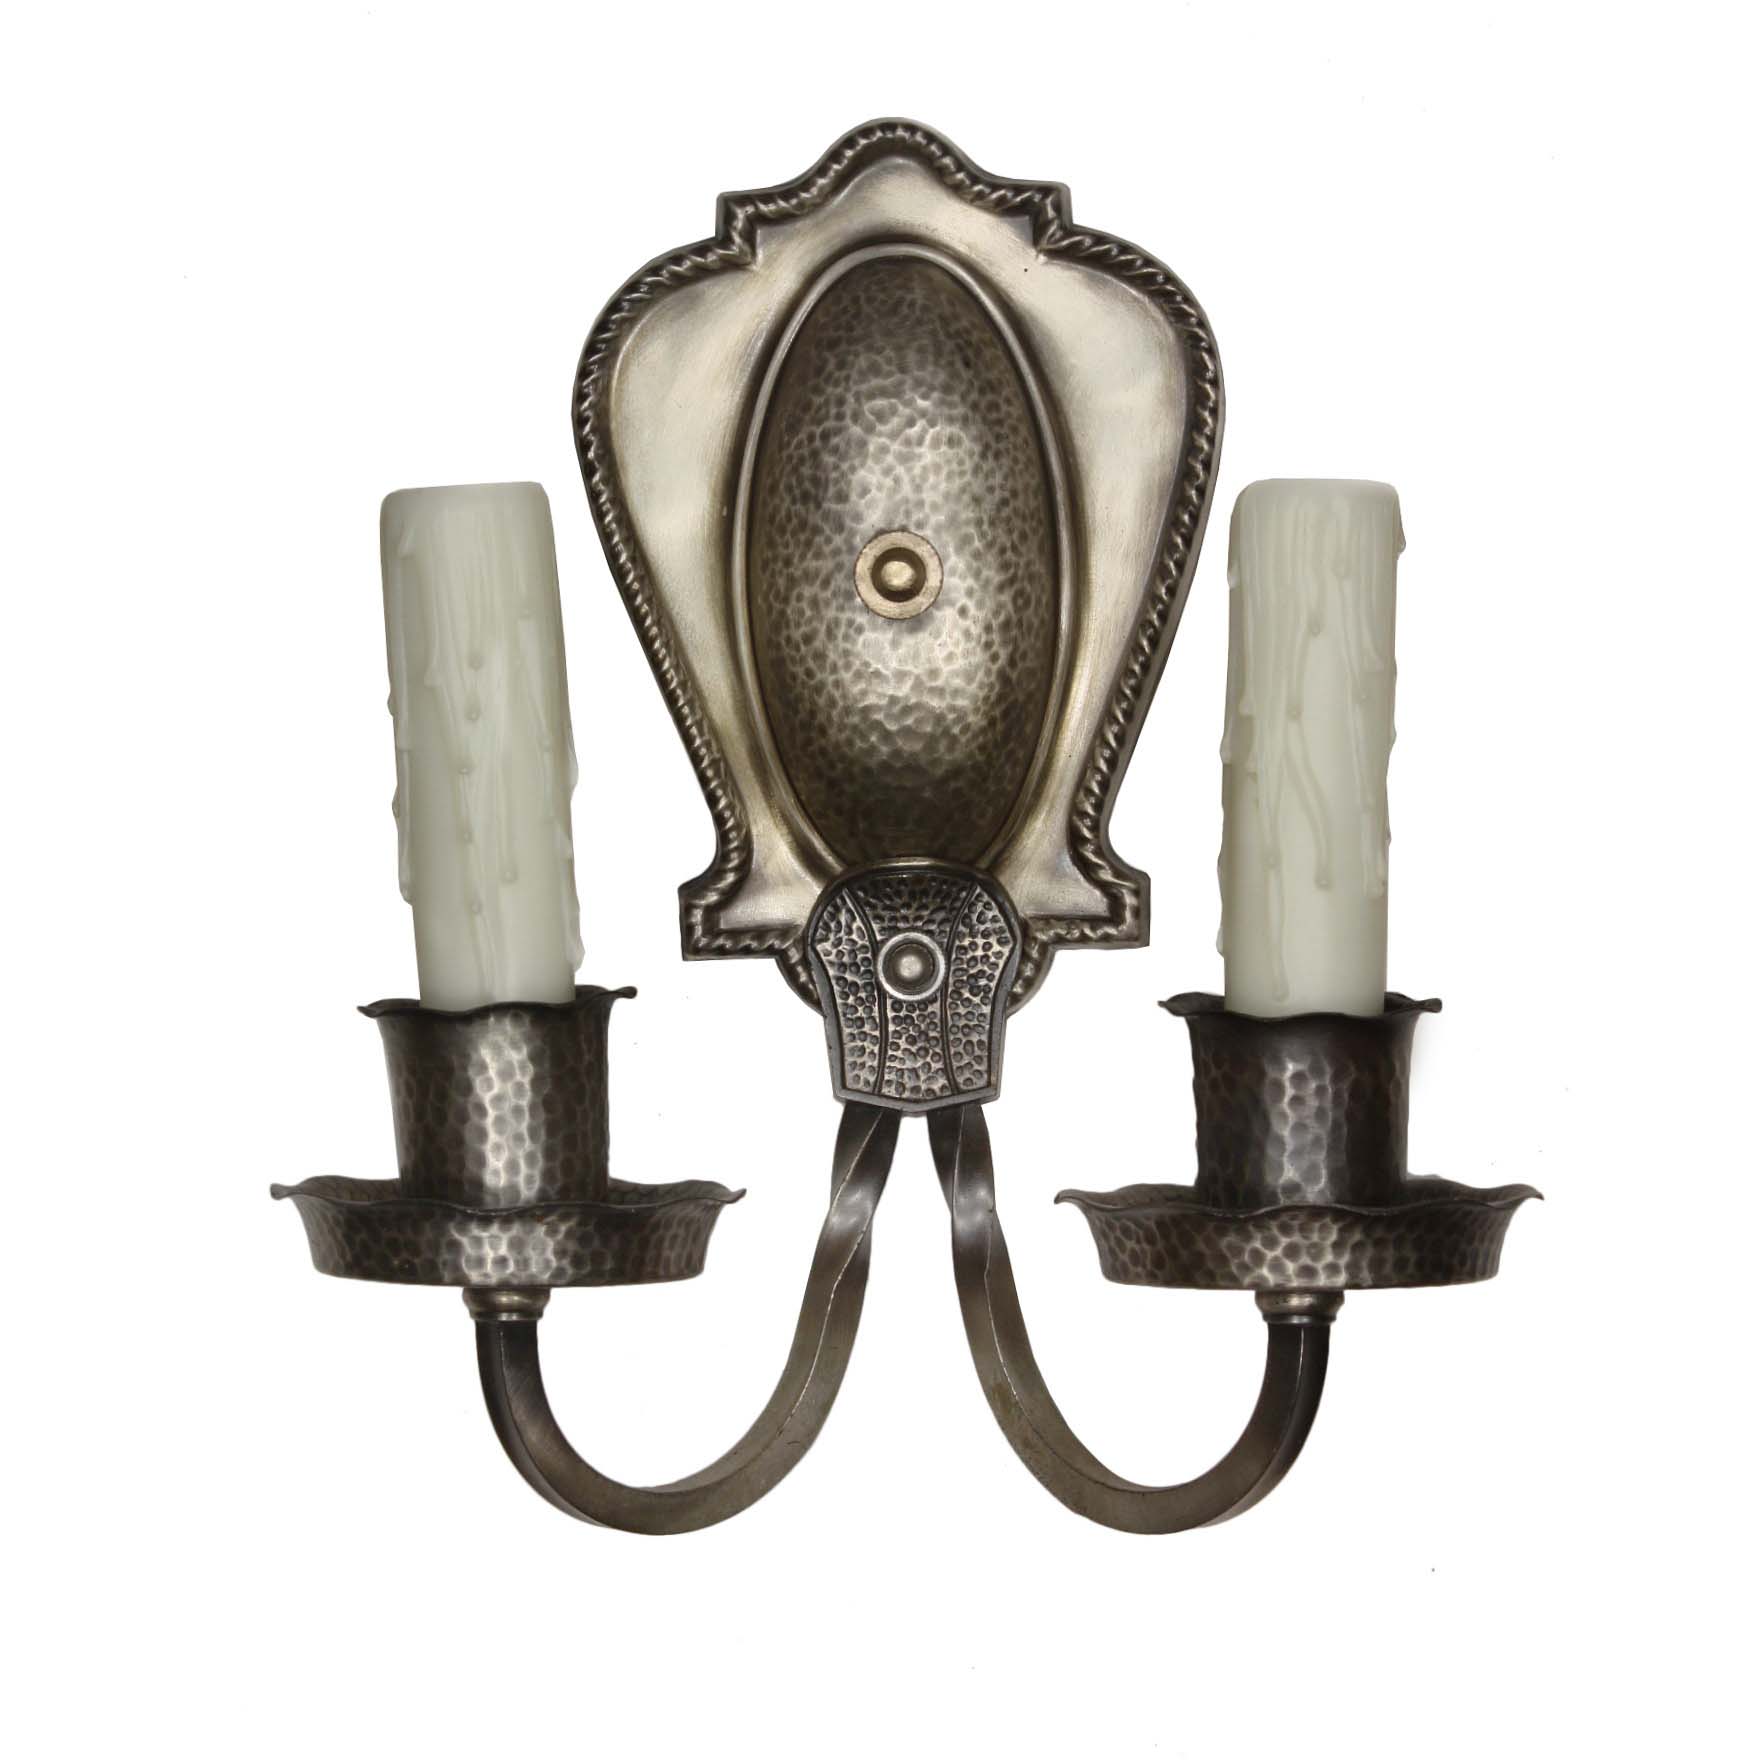 Tudor Sconce Pair in Darkened Nickel, Antique Lighting-59401